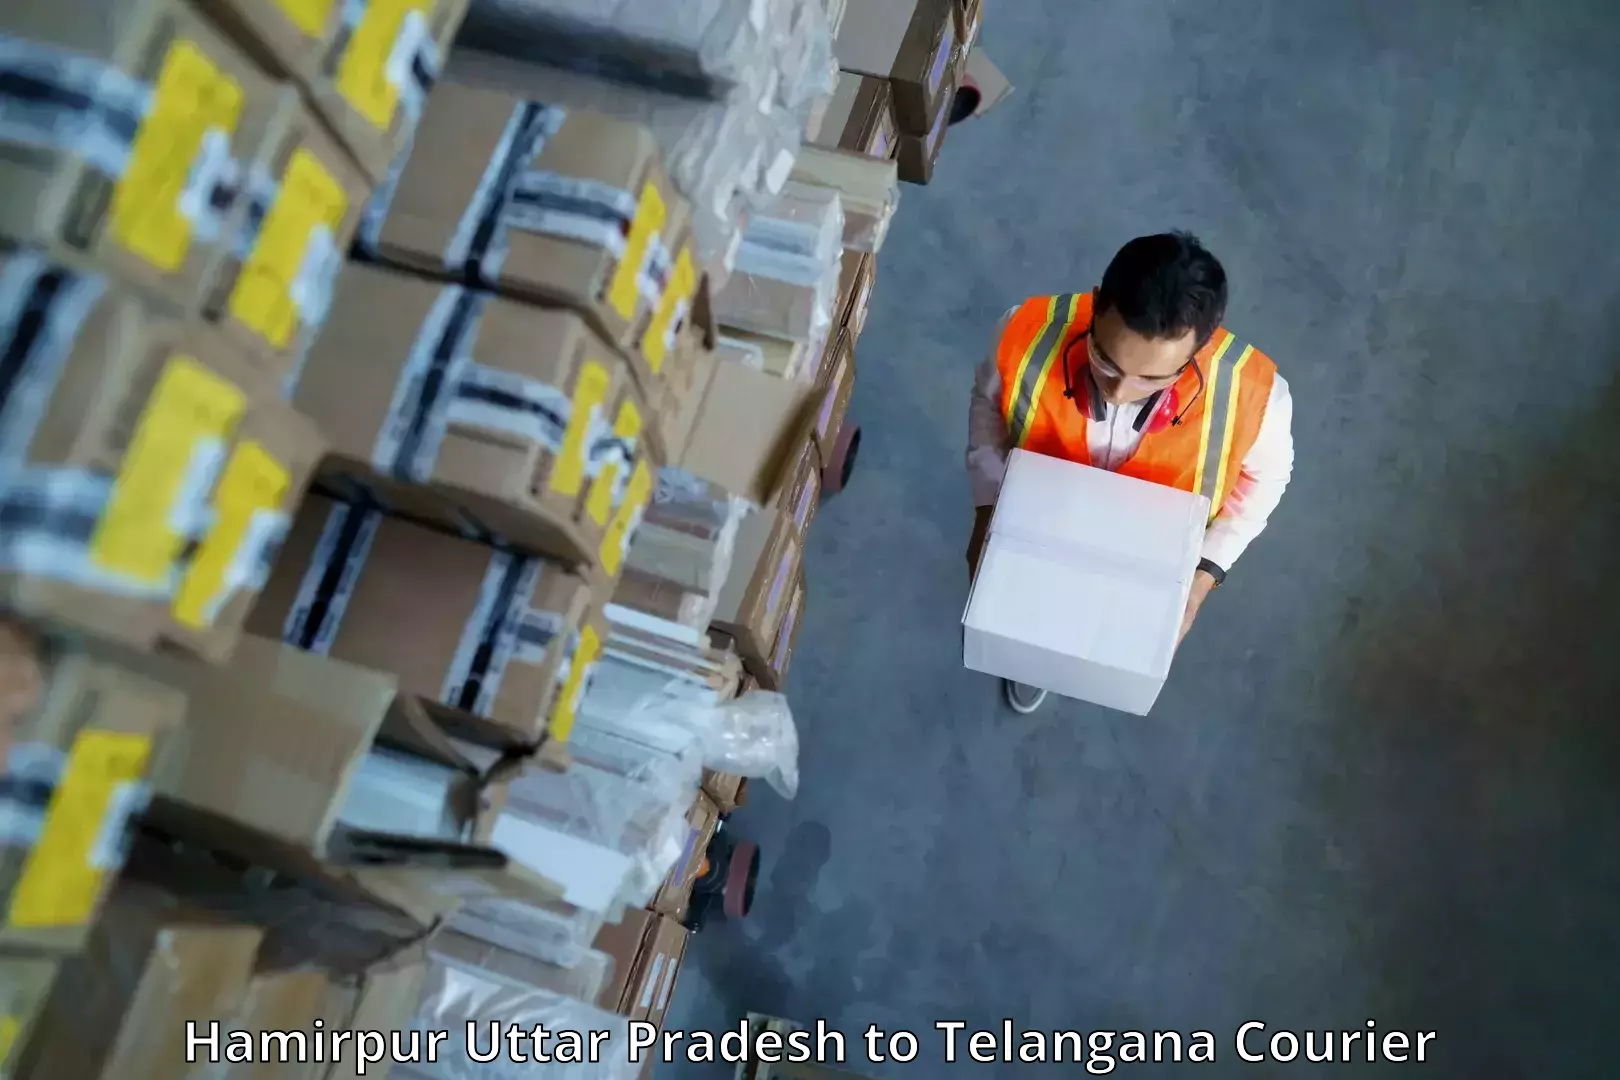 Courier service booking Hamirpur Uttar Pradesh to Rayaparthi